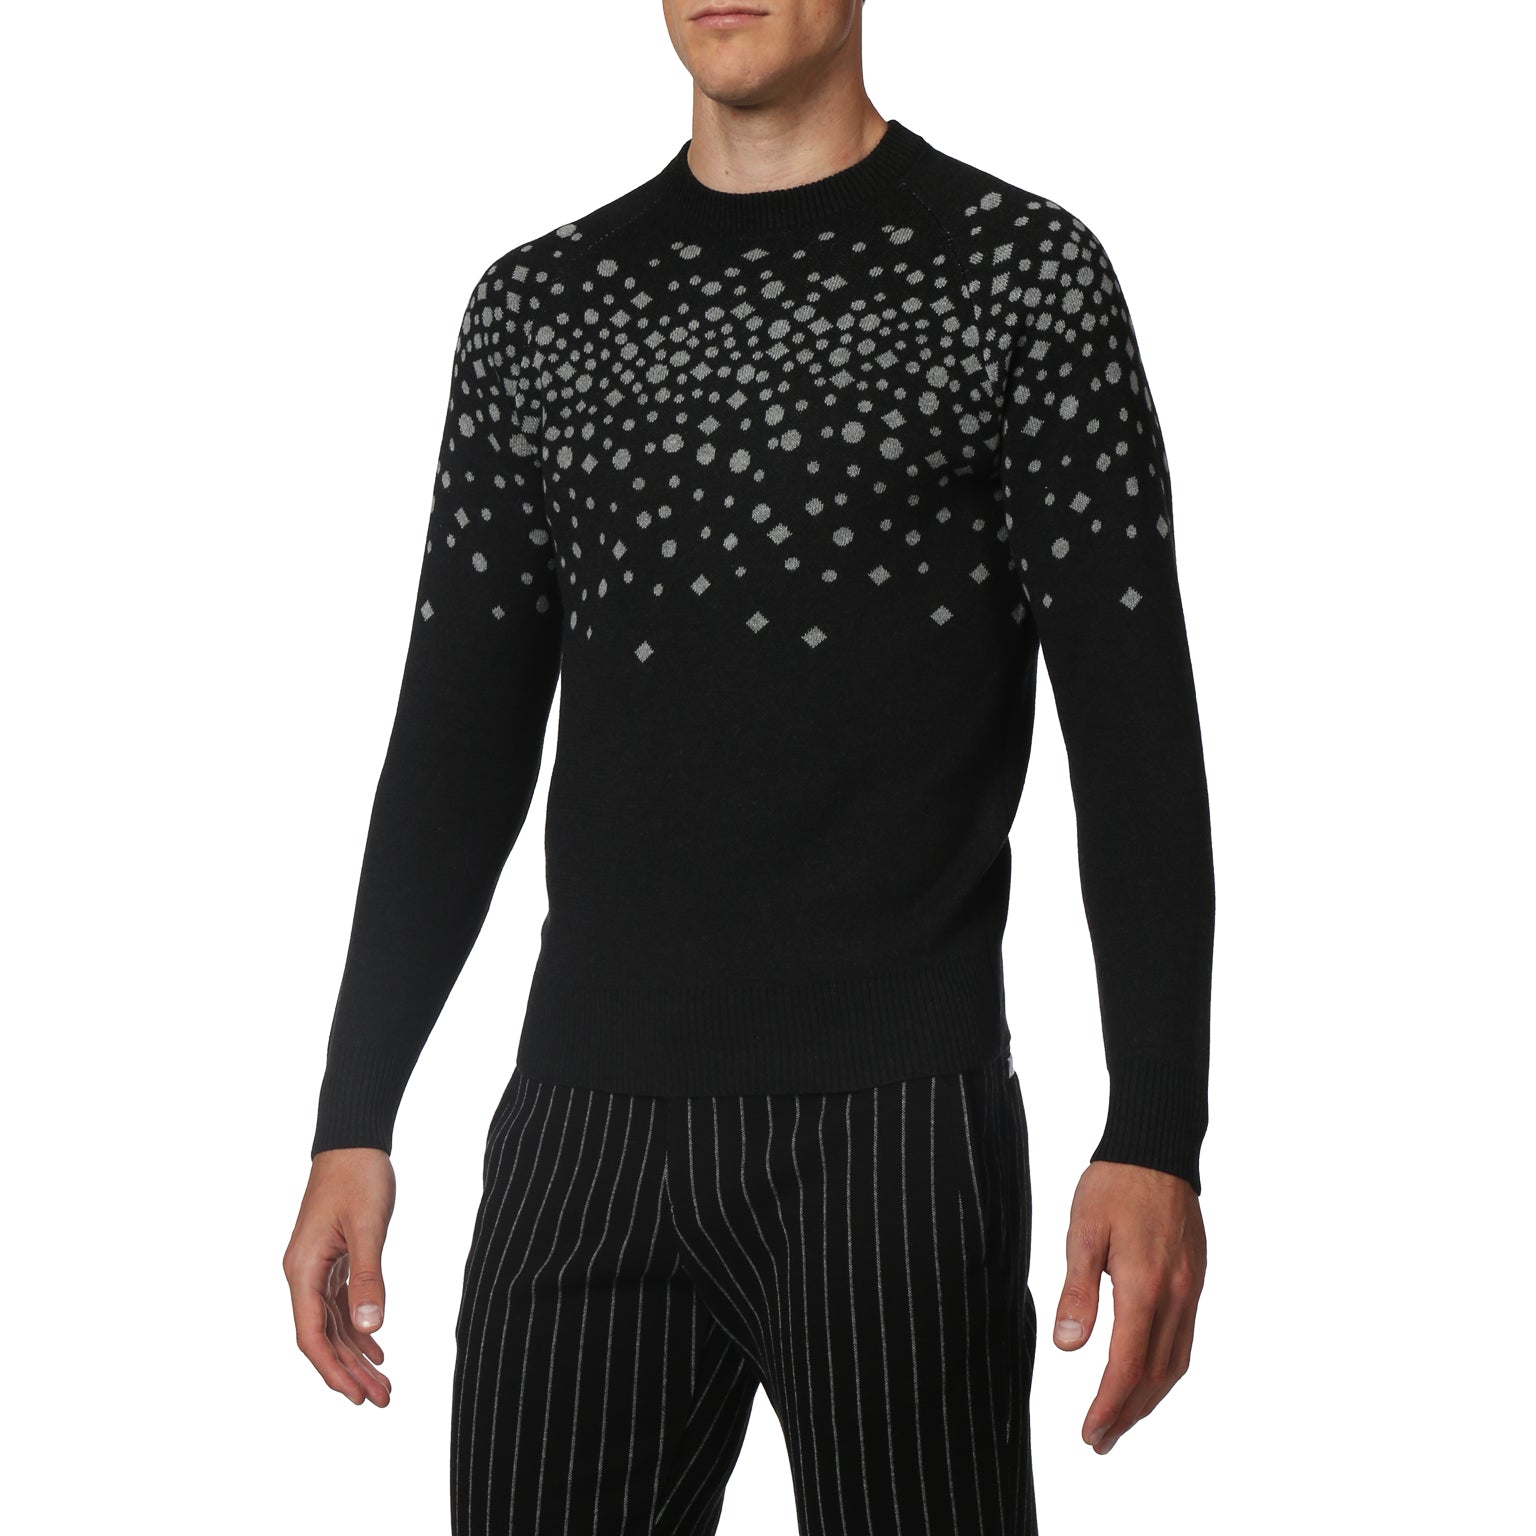 SAVE 70%- Space Black Starlight Sweater